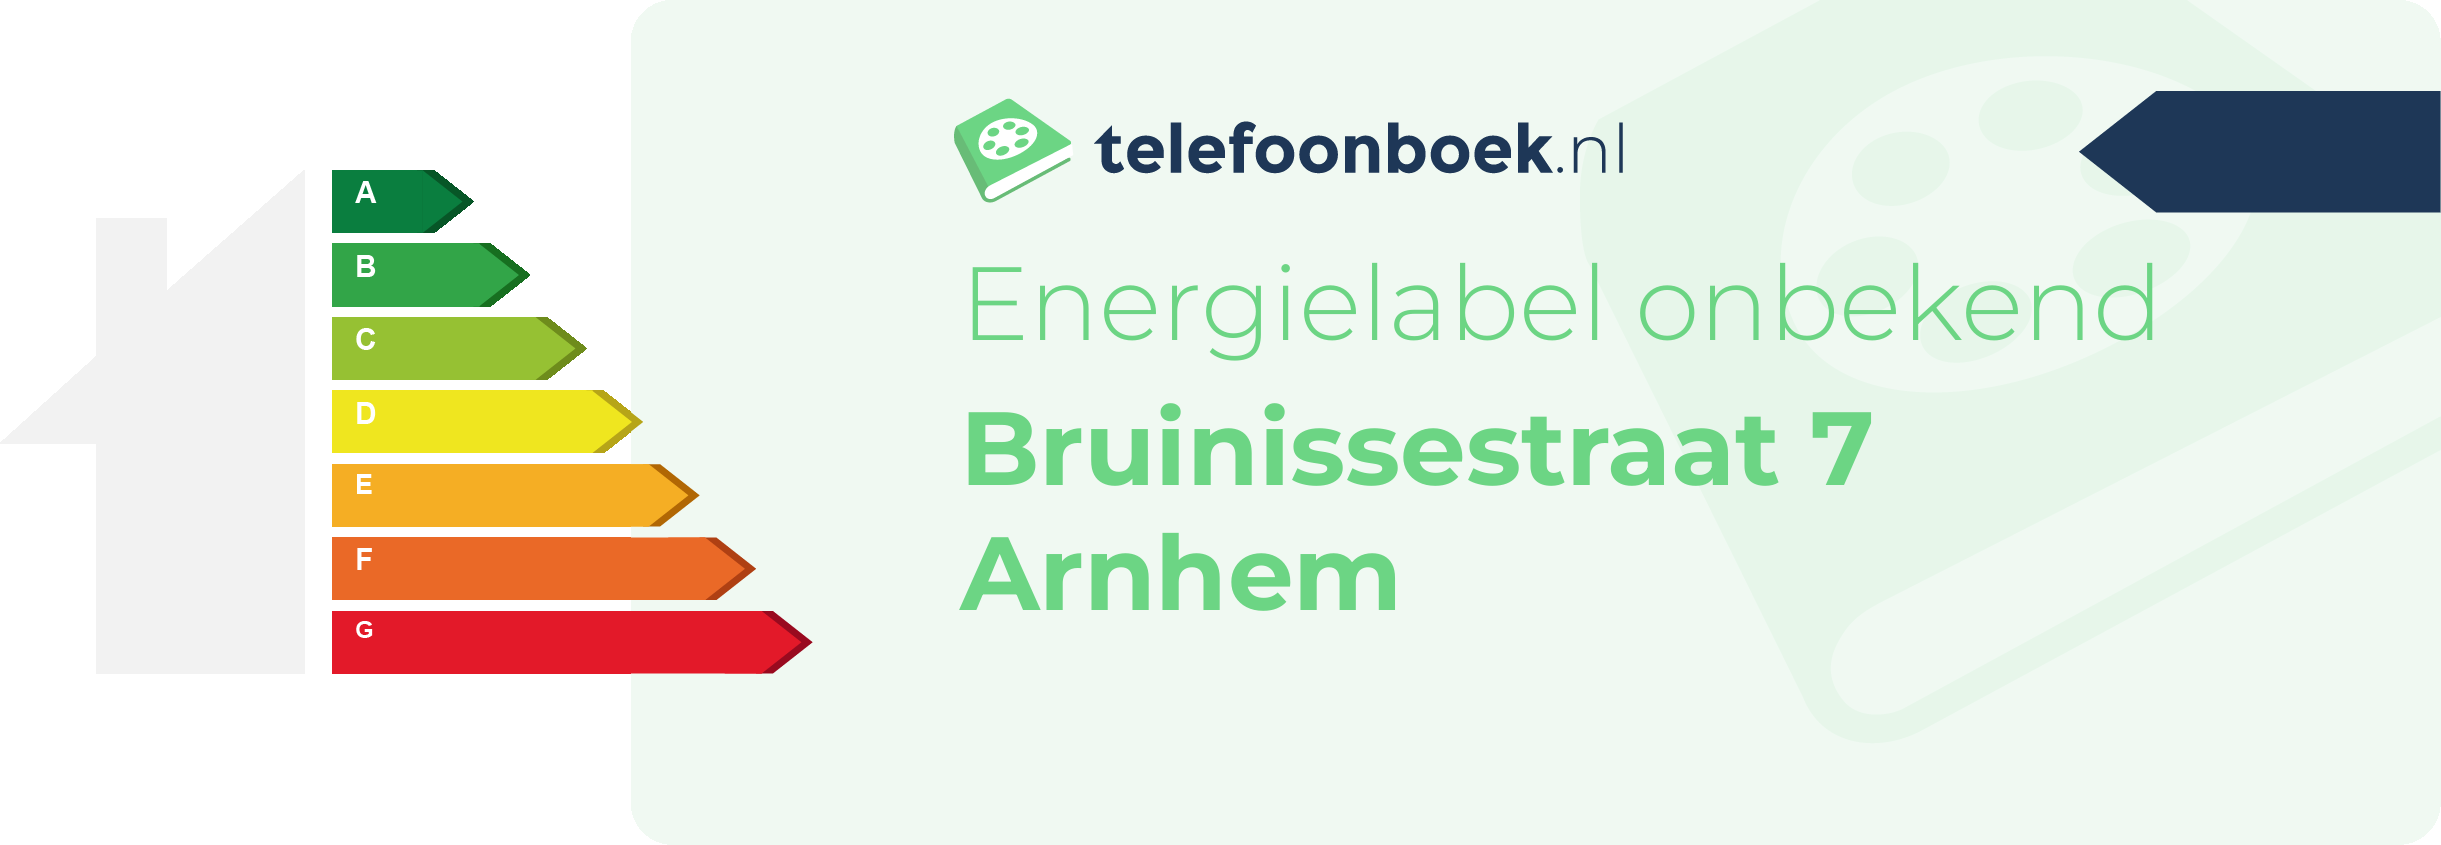 Energielabel Bruinissestraat 7 Arnhem